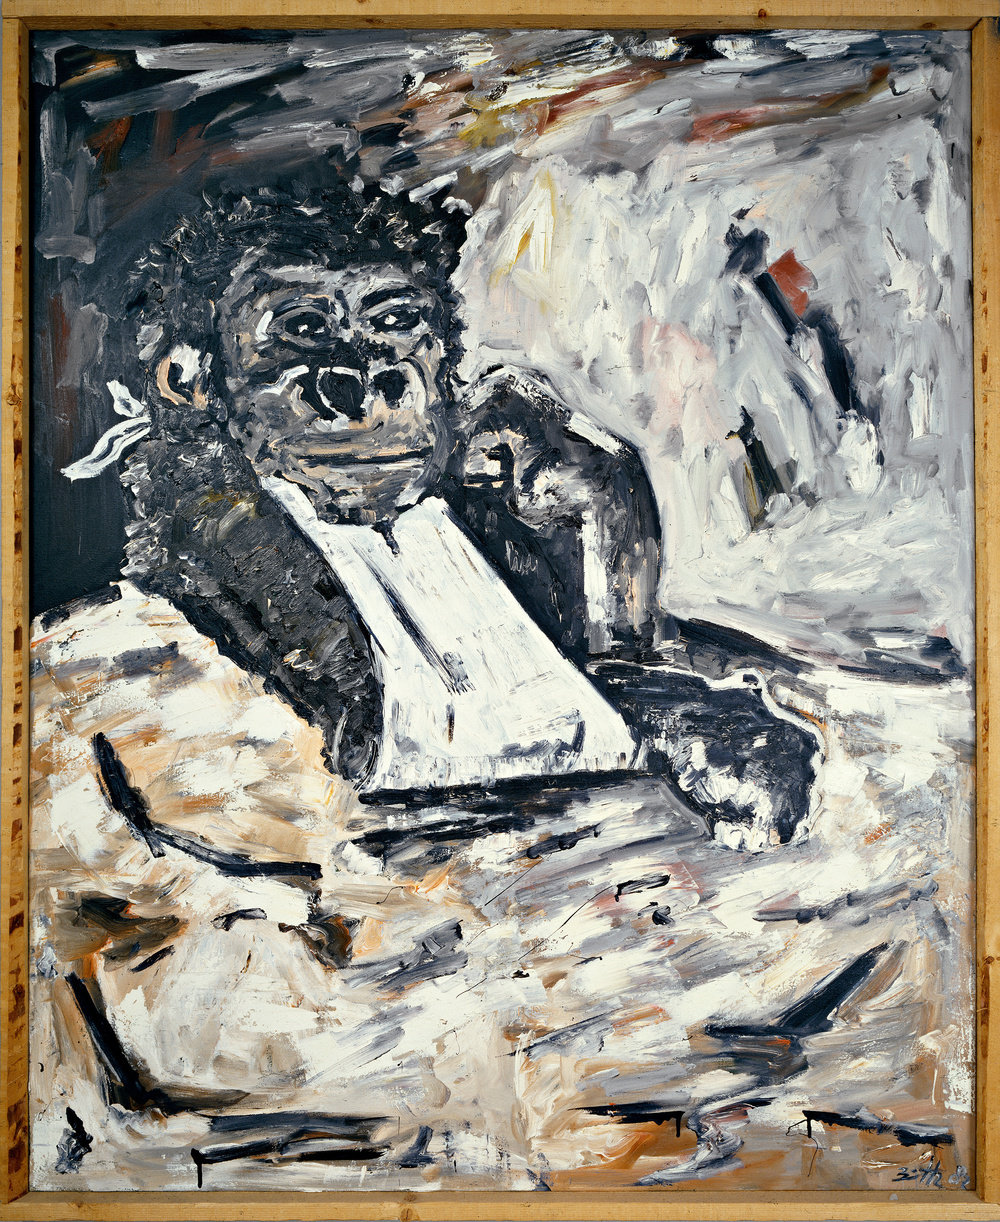 Büttner, sozialstaatimpressionen (welfare state impression), 1982, oil on canvas, 59 x 47 in., 150 x 120 cm